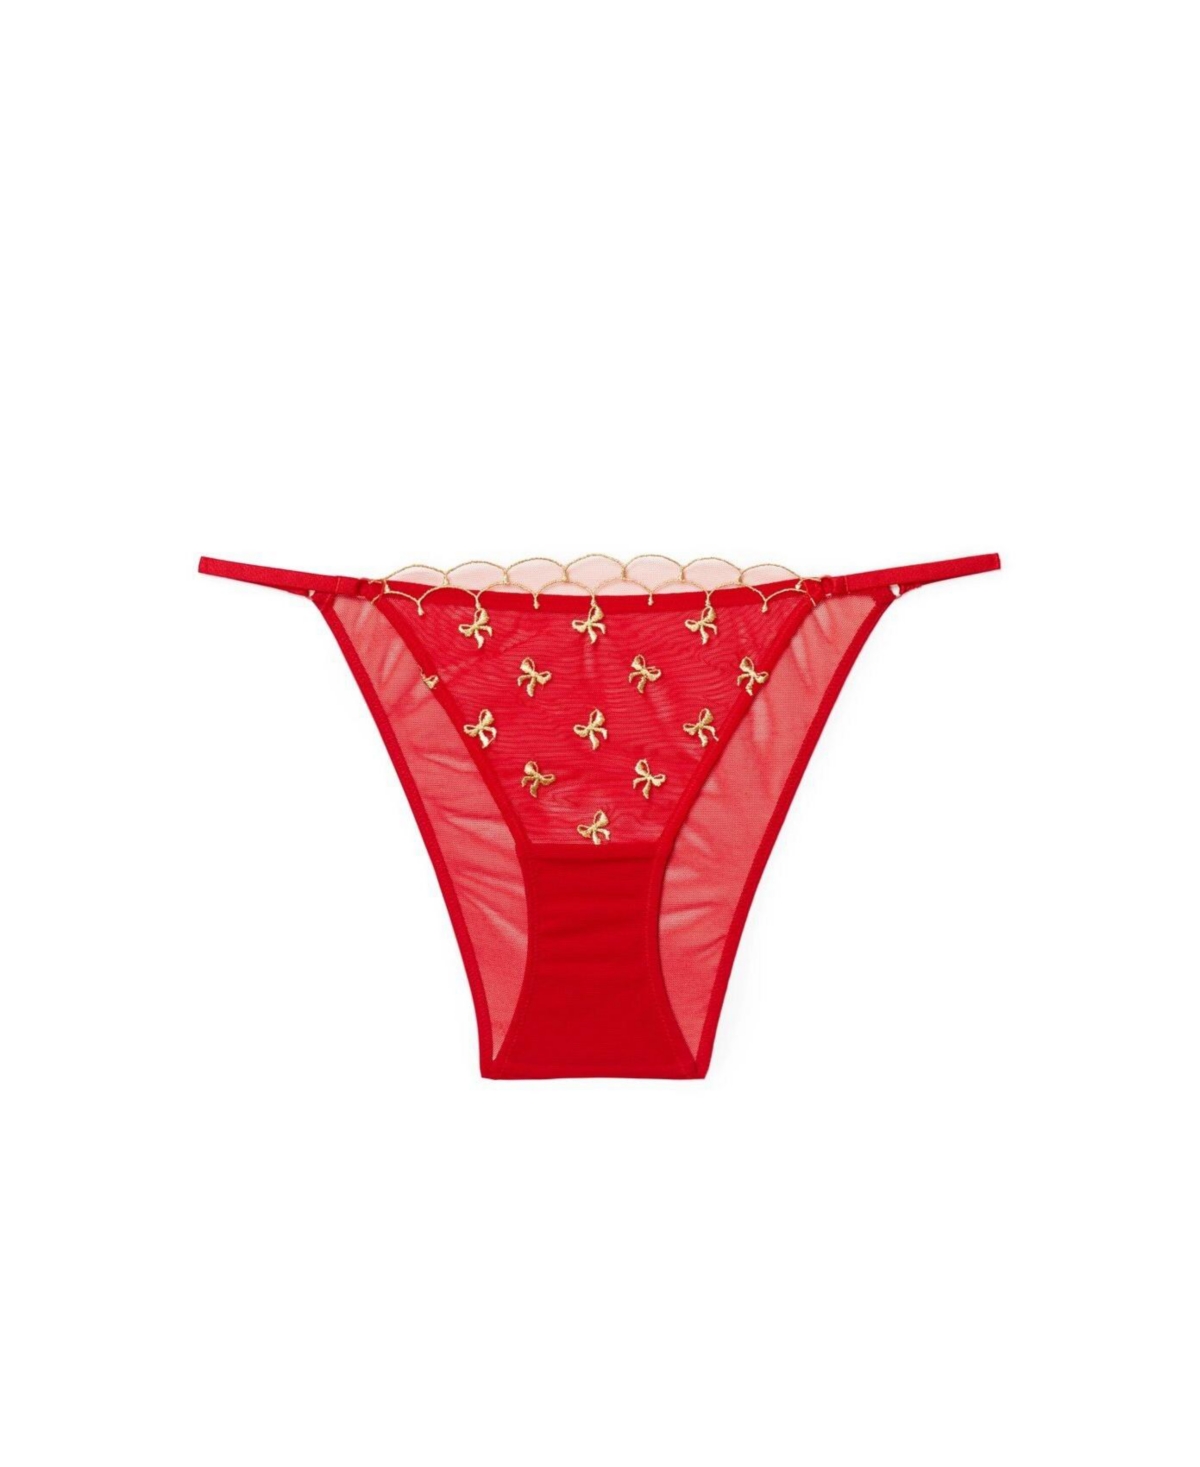 Women's Bettie Brazilian Panty - Holidays Edition! - Dark red